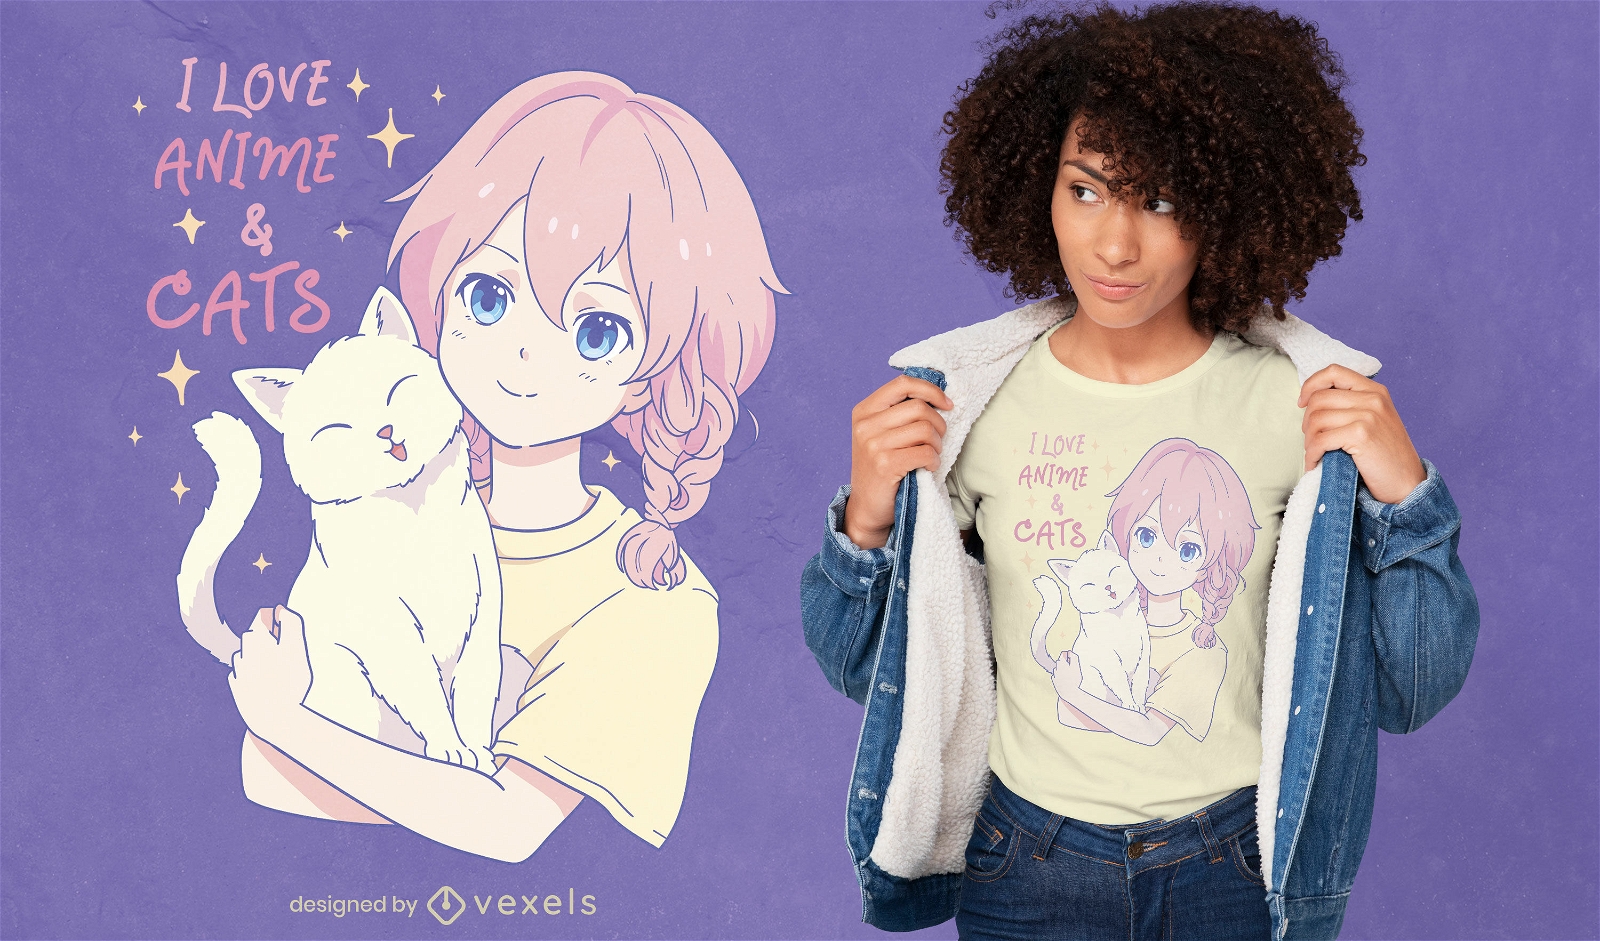 Cat and anime lover girl t-shirt design